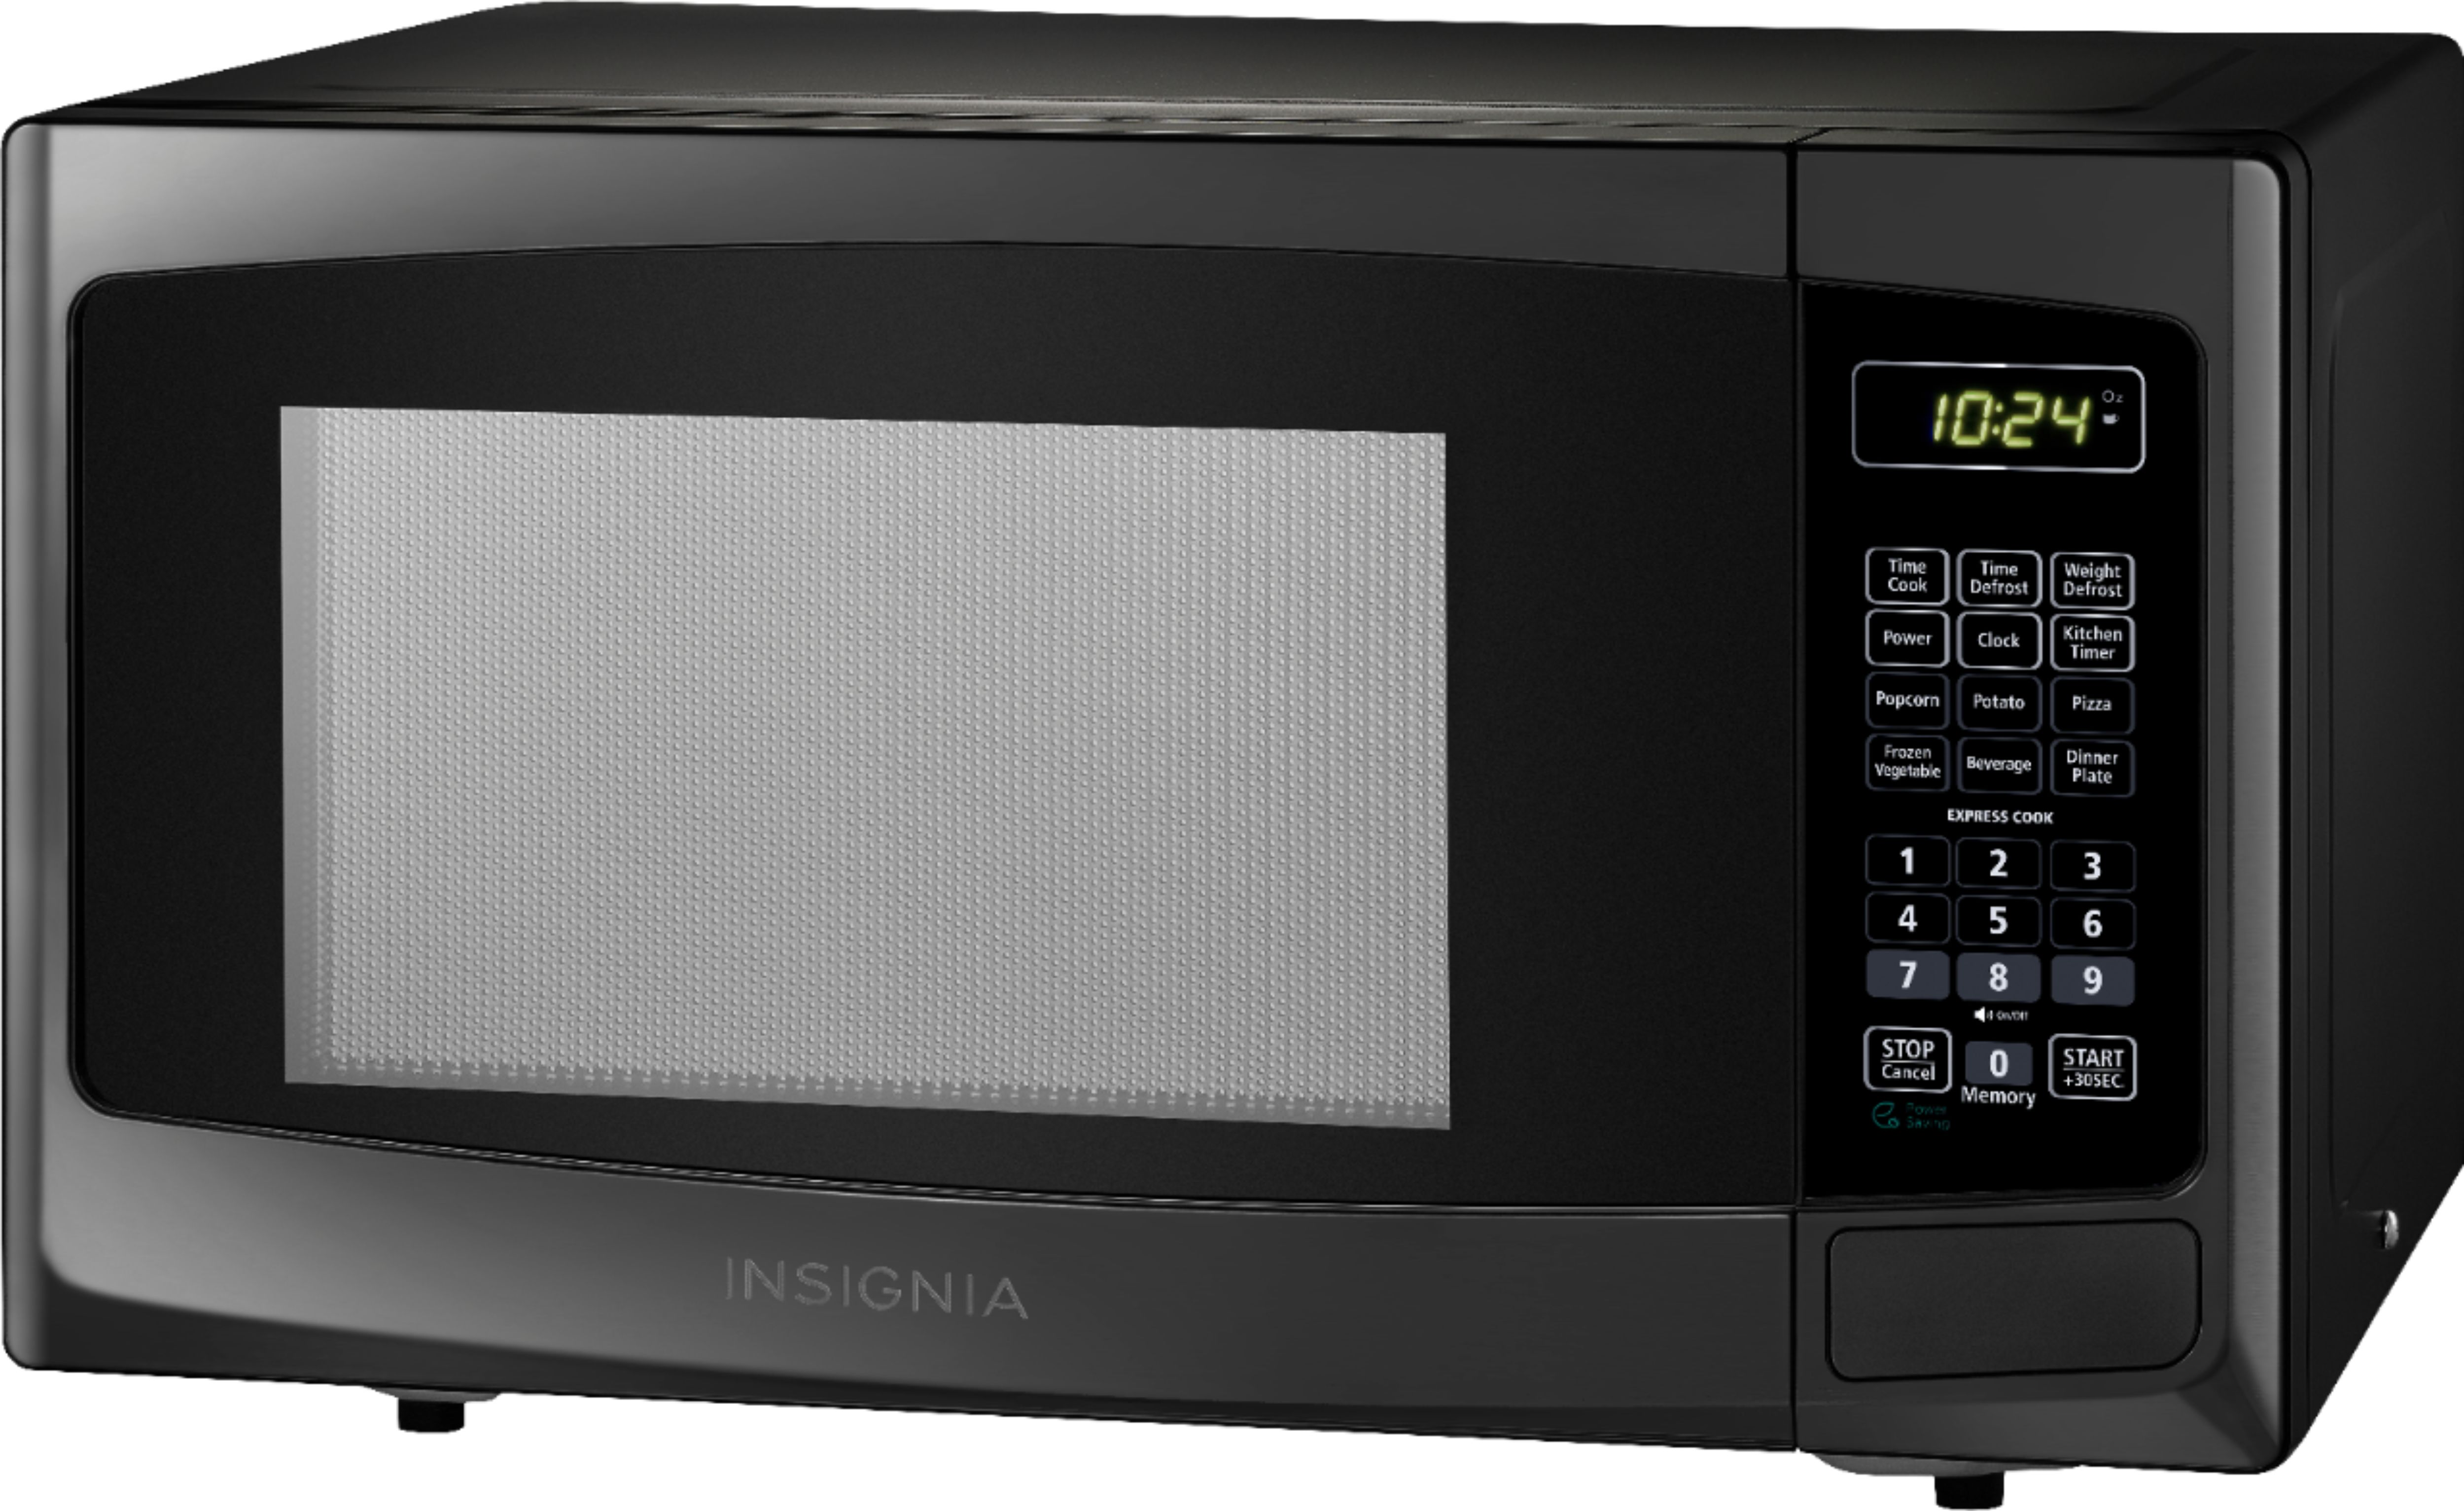 Insignia Microwave Error Codes 